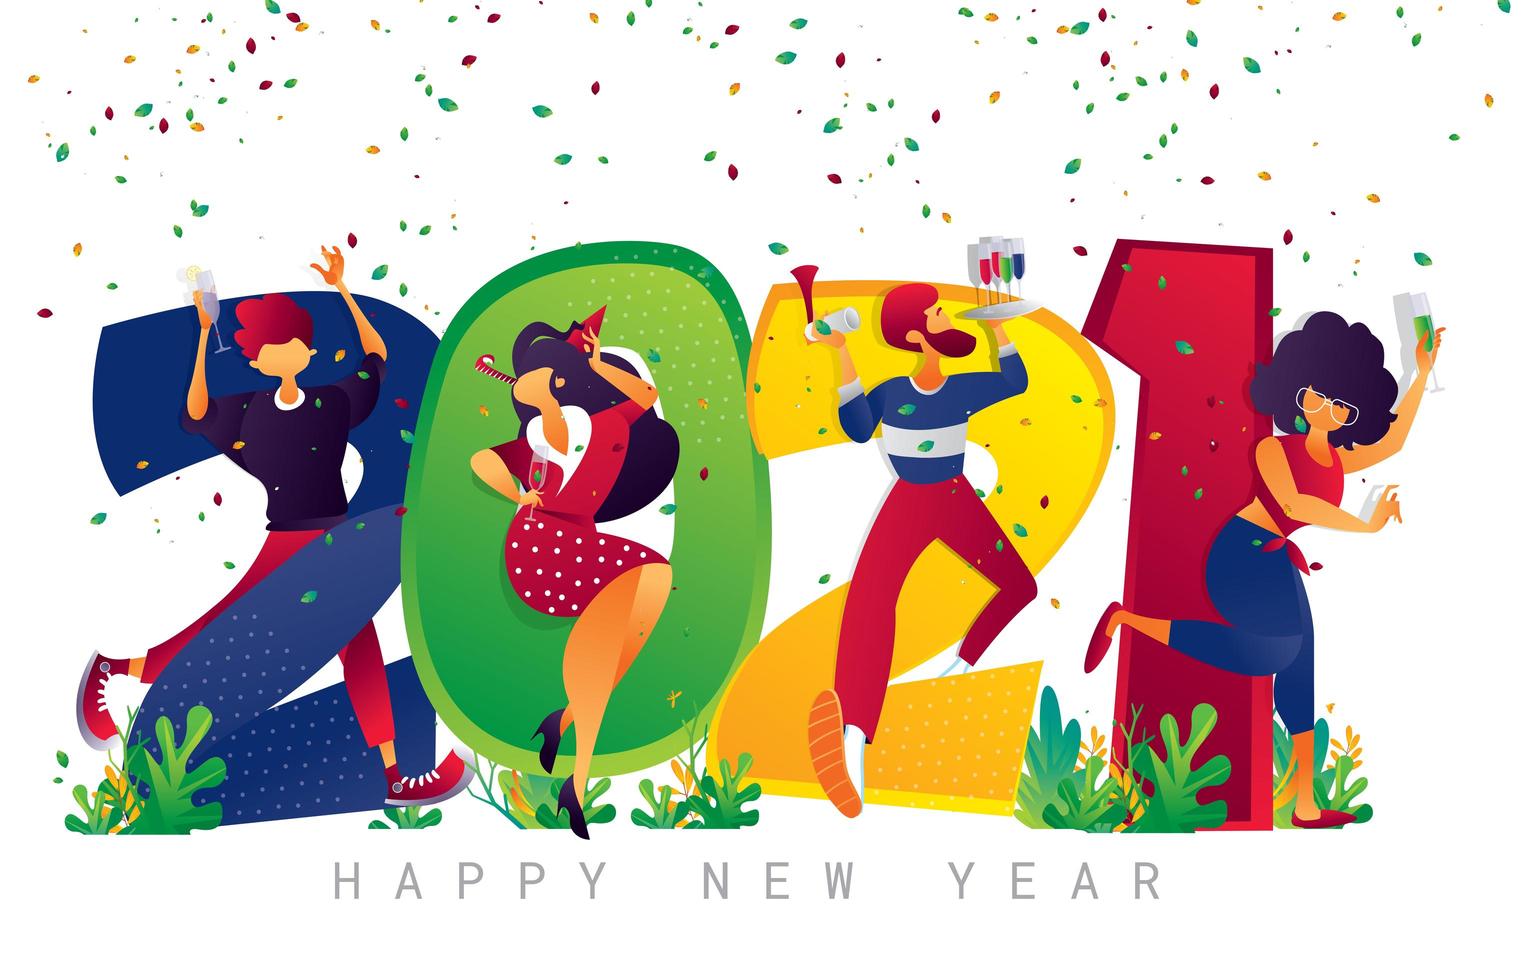 Celebrating Happy New Year 2021 vector